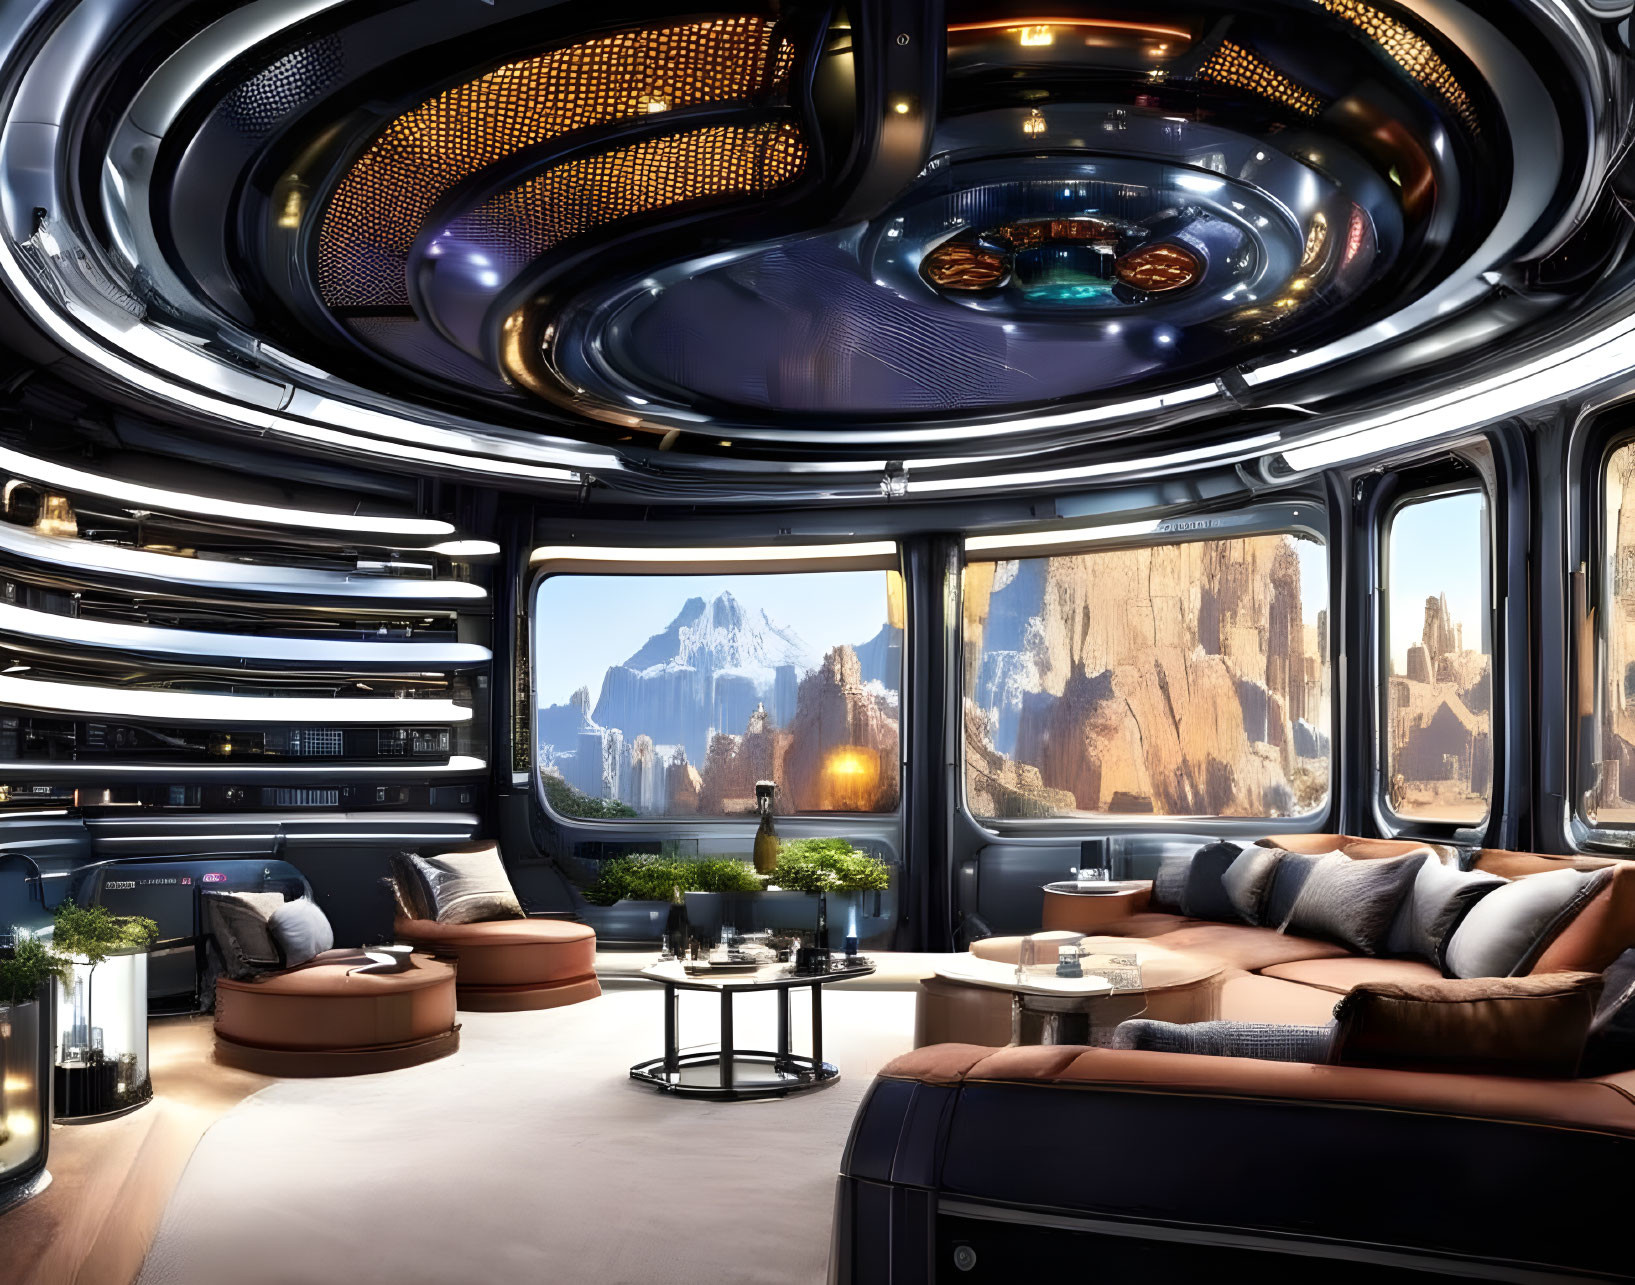 Sleek Black Futuristic Luxury Room with Circular Lighting and Mountain View